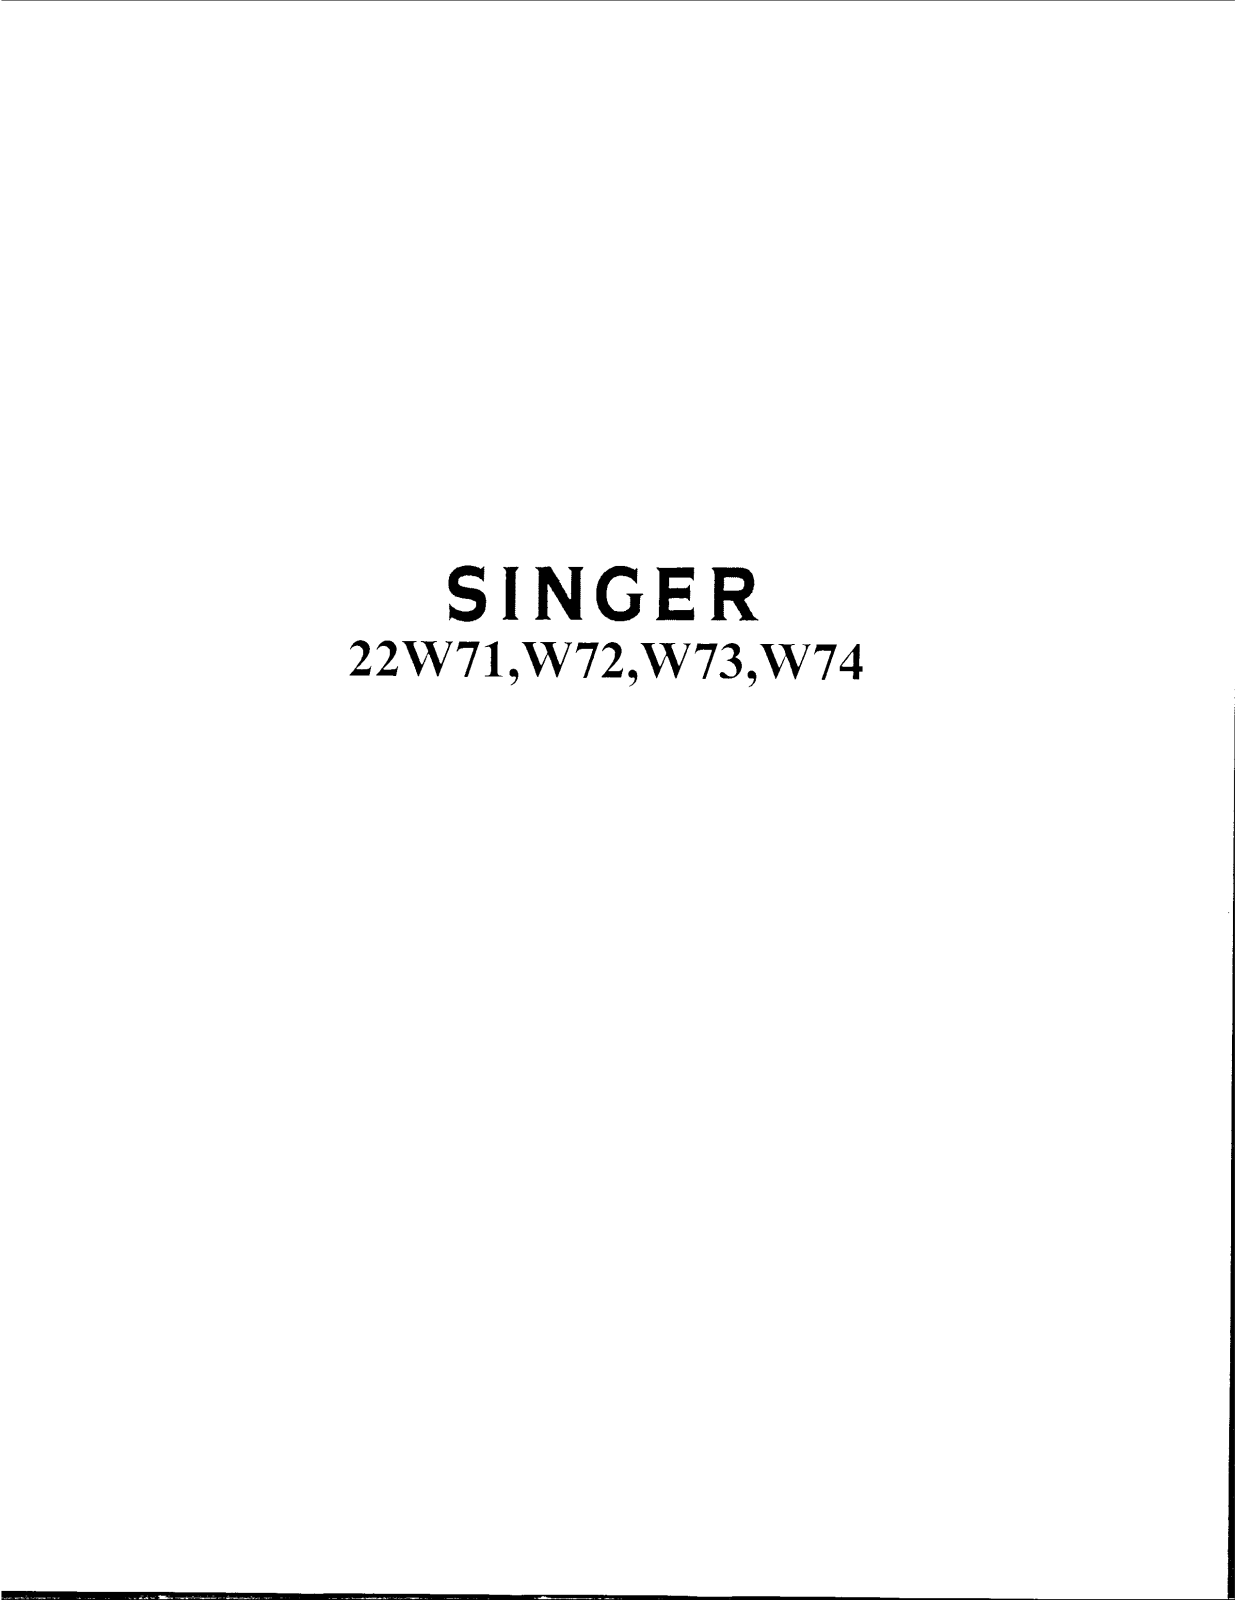 Singer 22W74, 22W71, 22W72, 22W73 User Manual